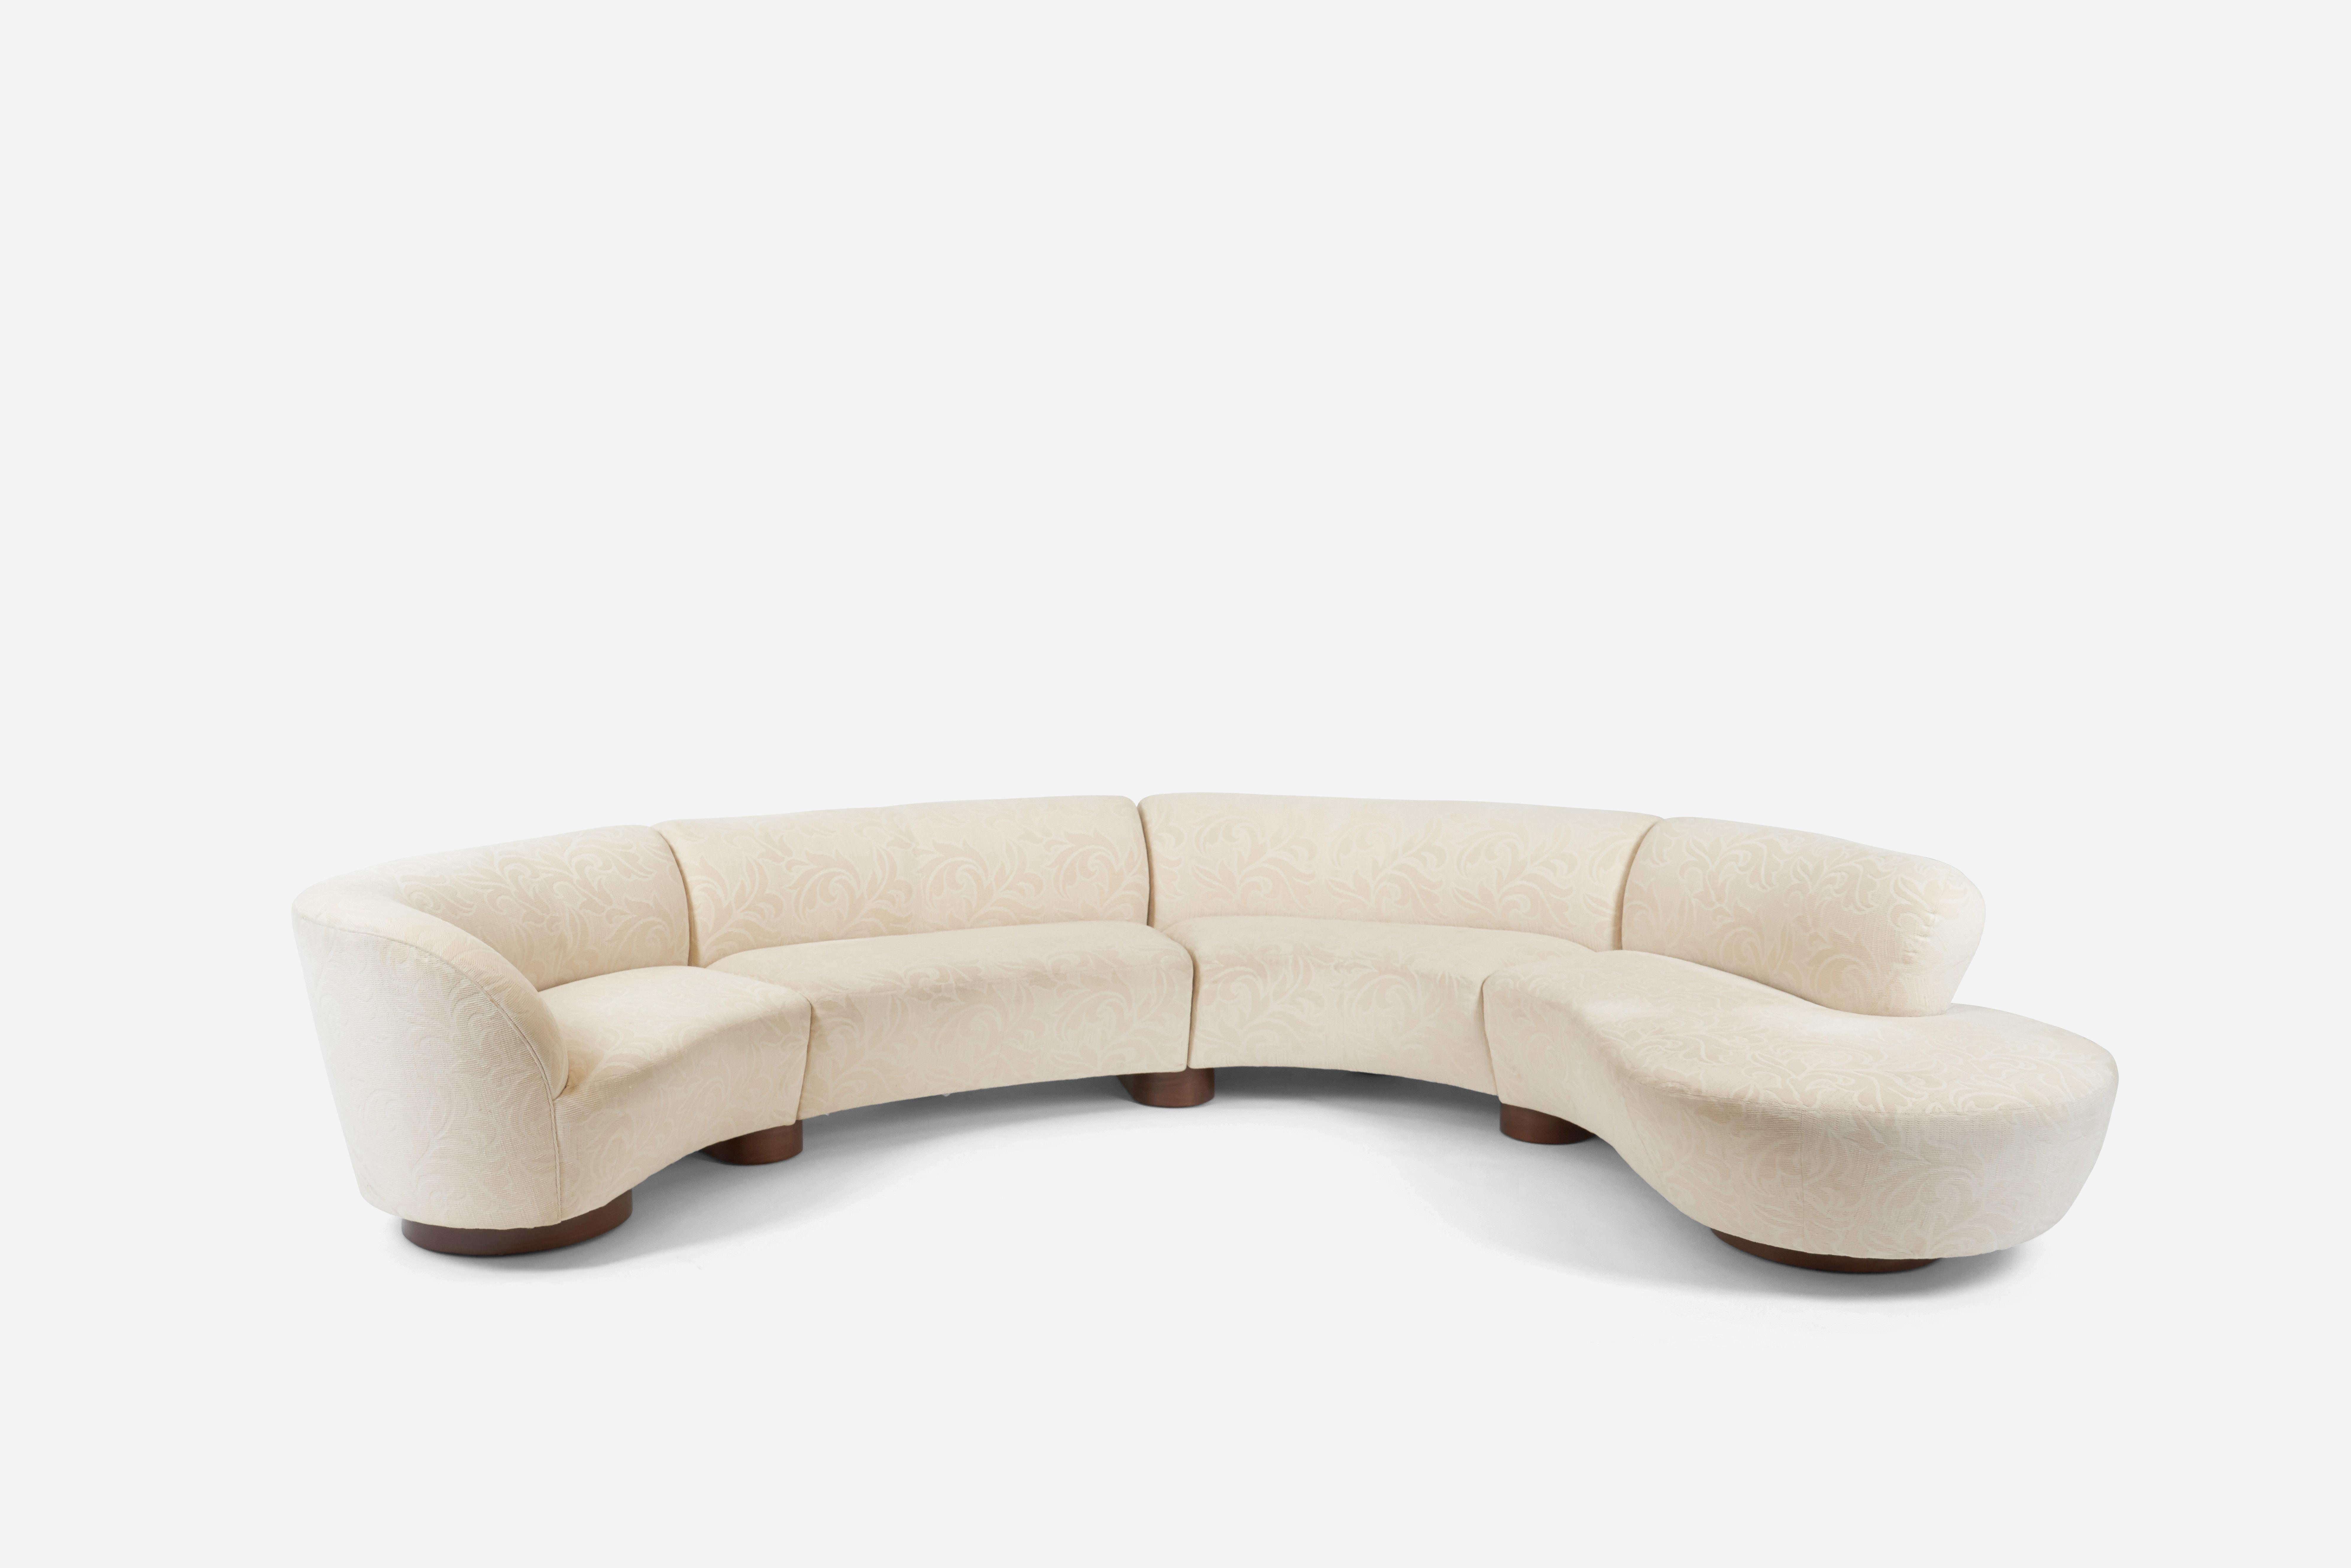 Late 20th Century Vladimir Kagan Serpentine Sectional Sofa